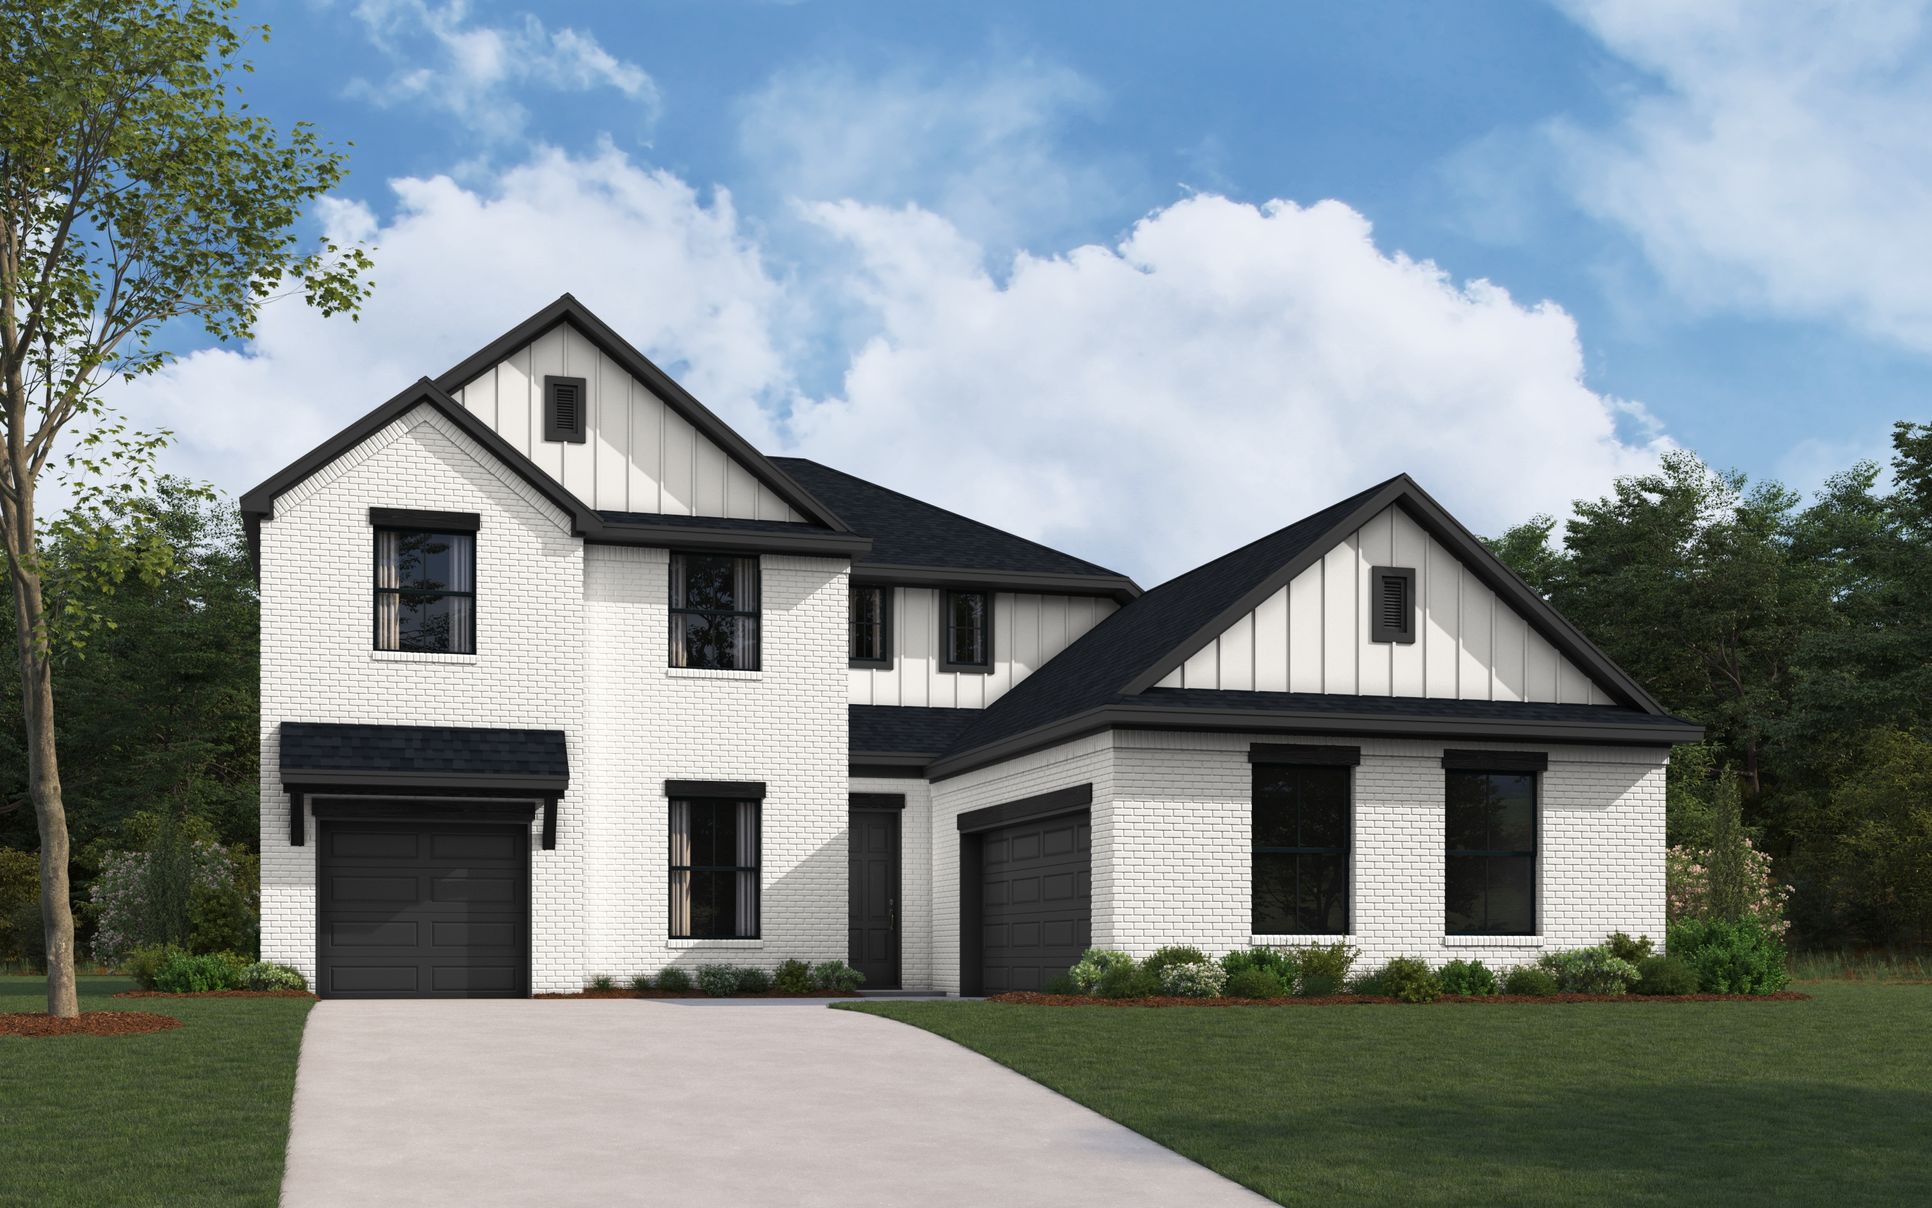 The Shenandoah II Floorplan - Modern Farmhouse Exterior:New home construction Dallas - William Ryan Homes - for sale